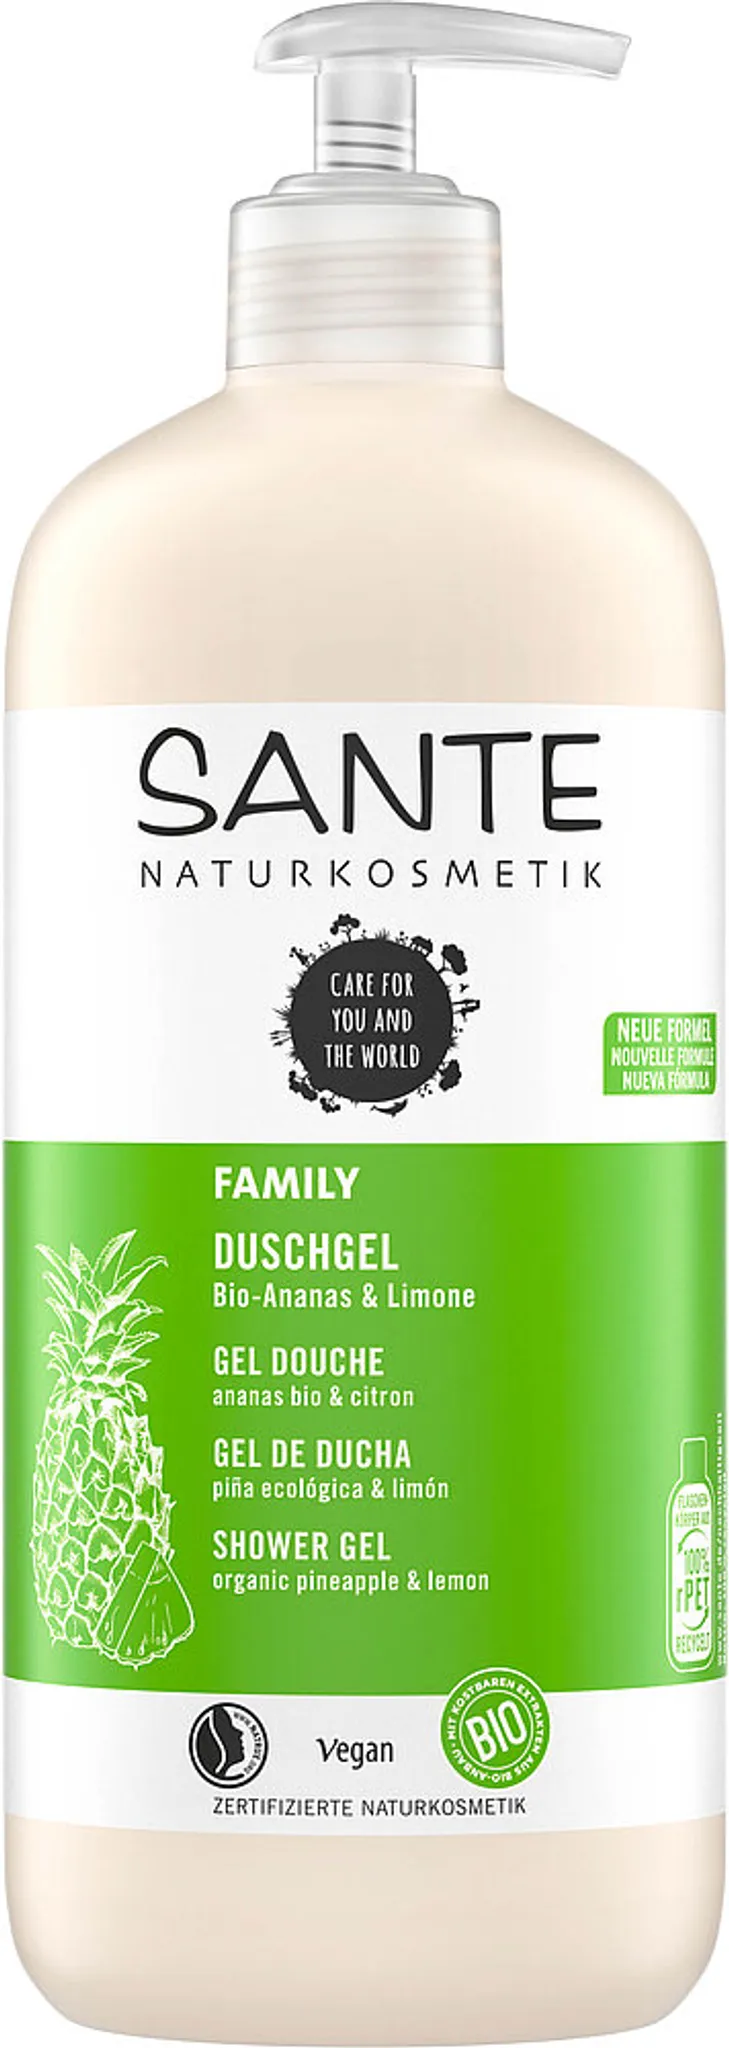 Bio-Ananas 500ml SANTE & Duschgel | | Family